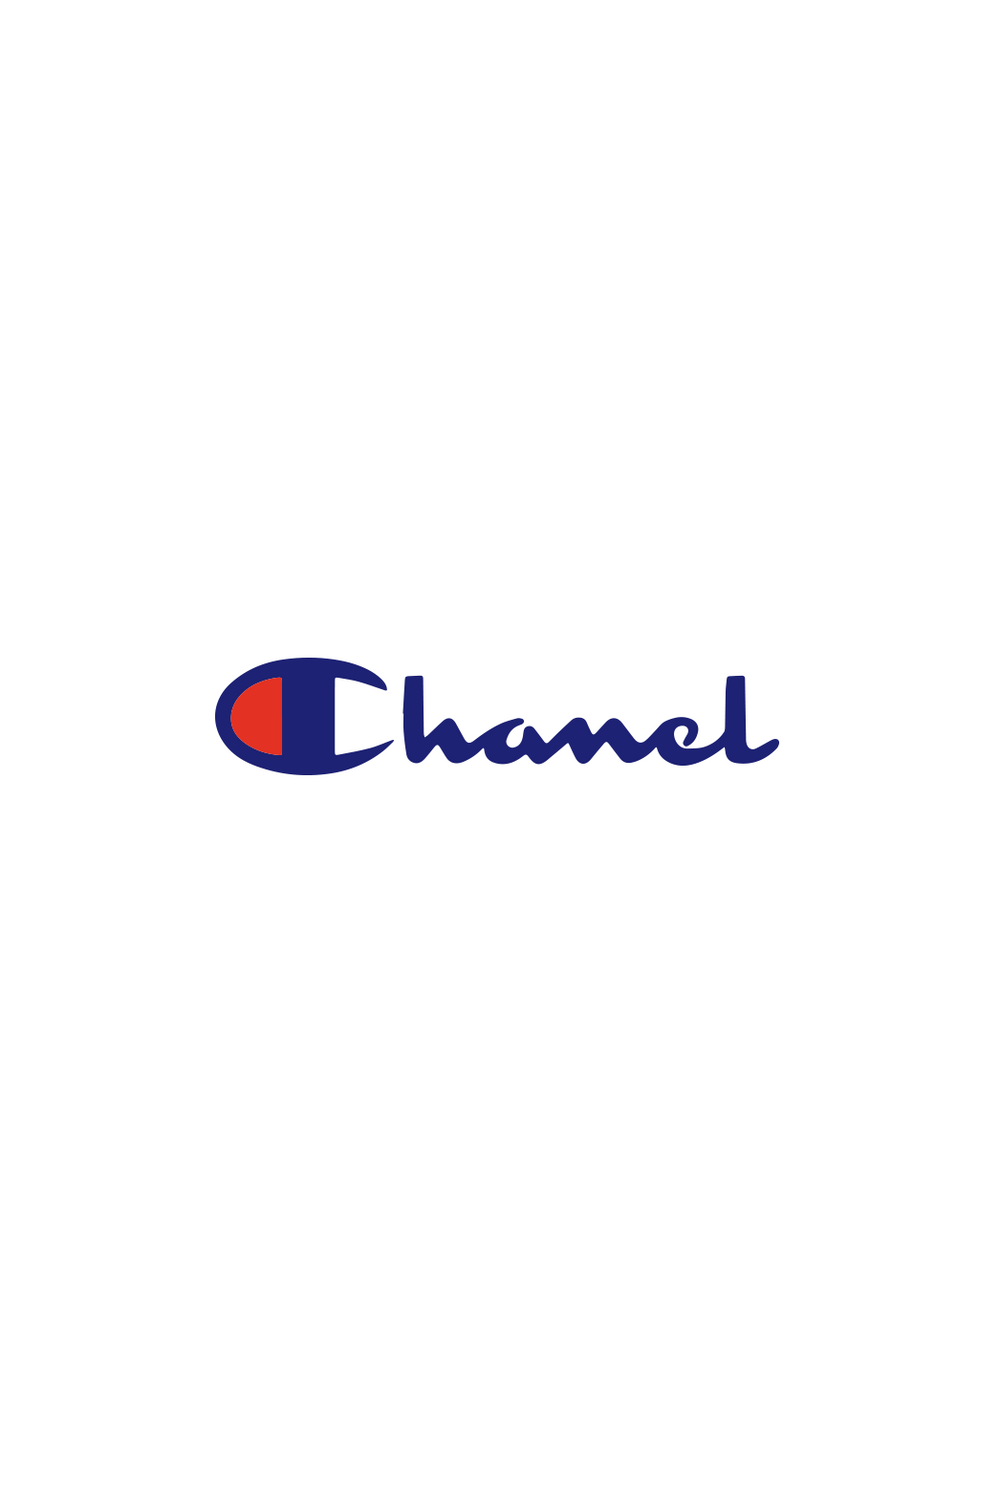 Champion Chanel tealer, Tee White